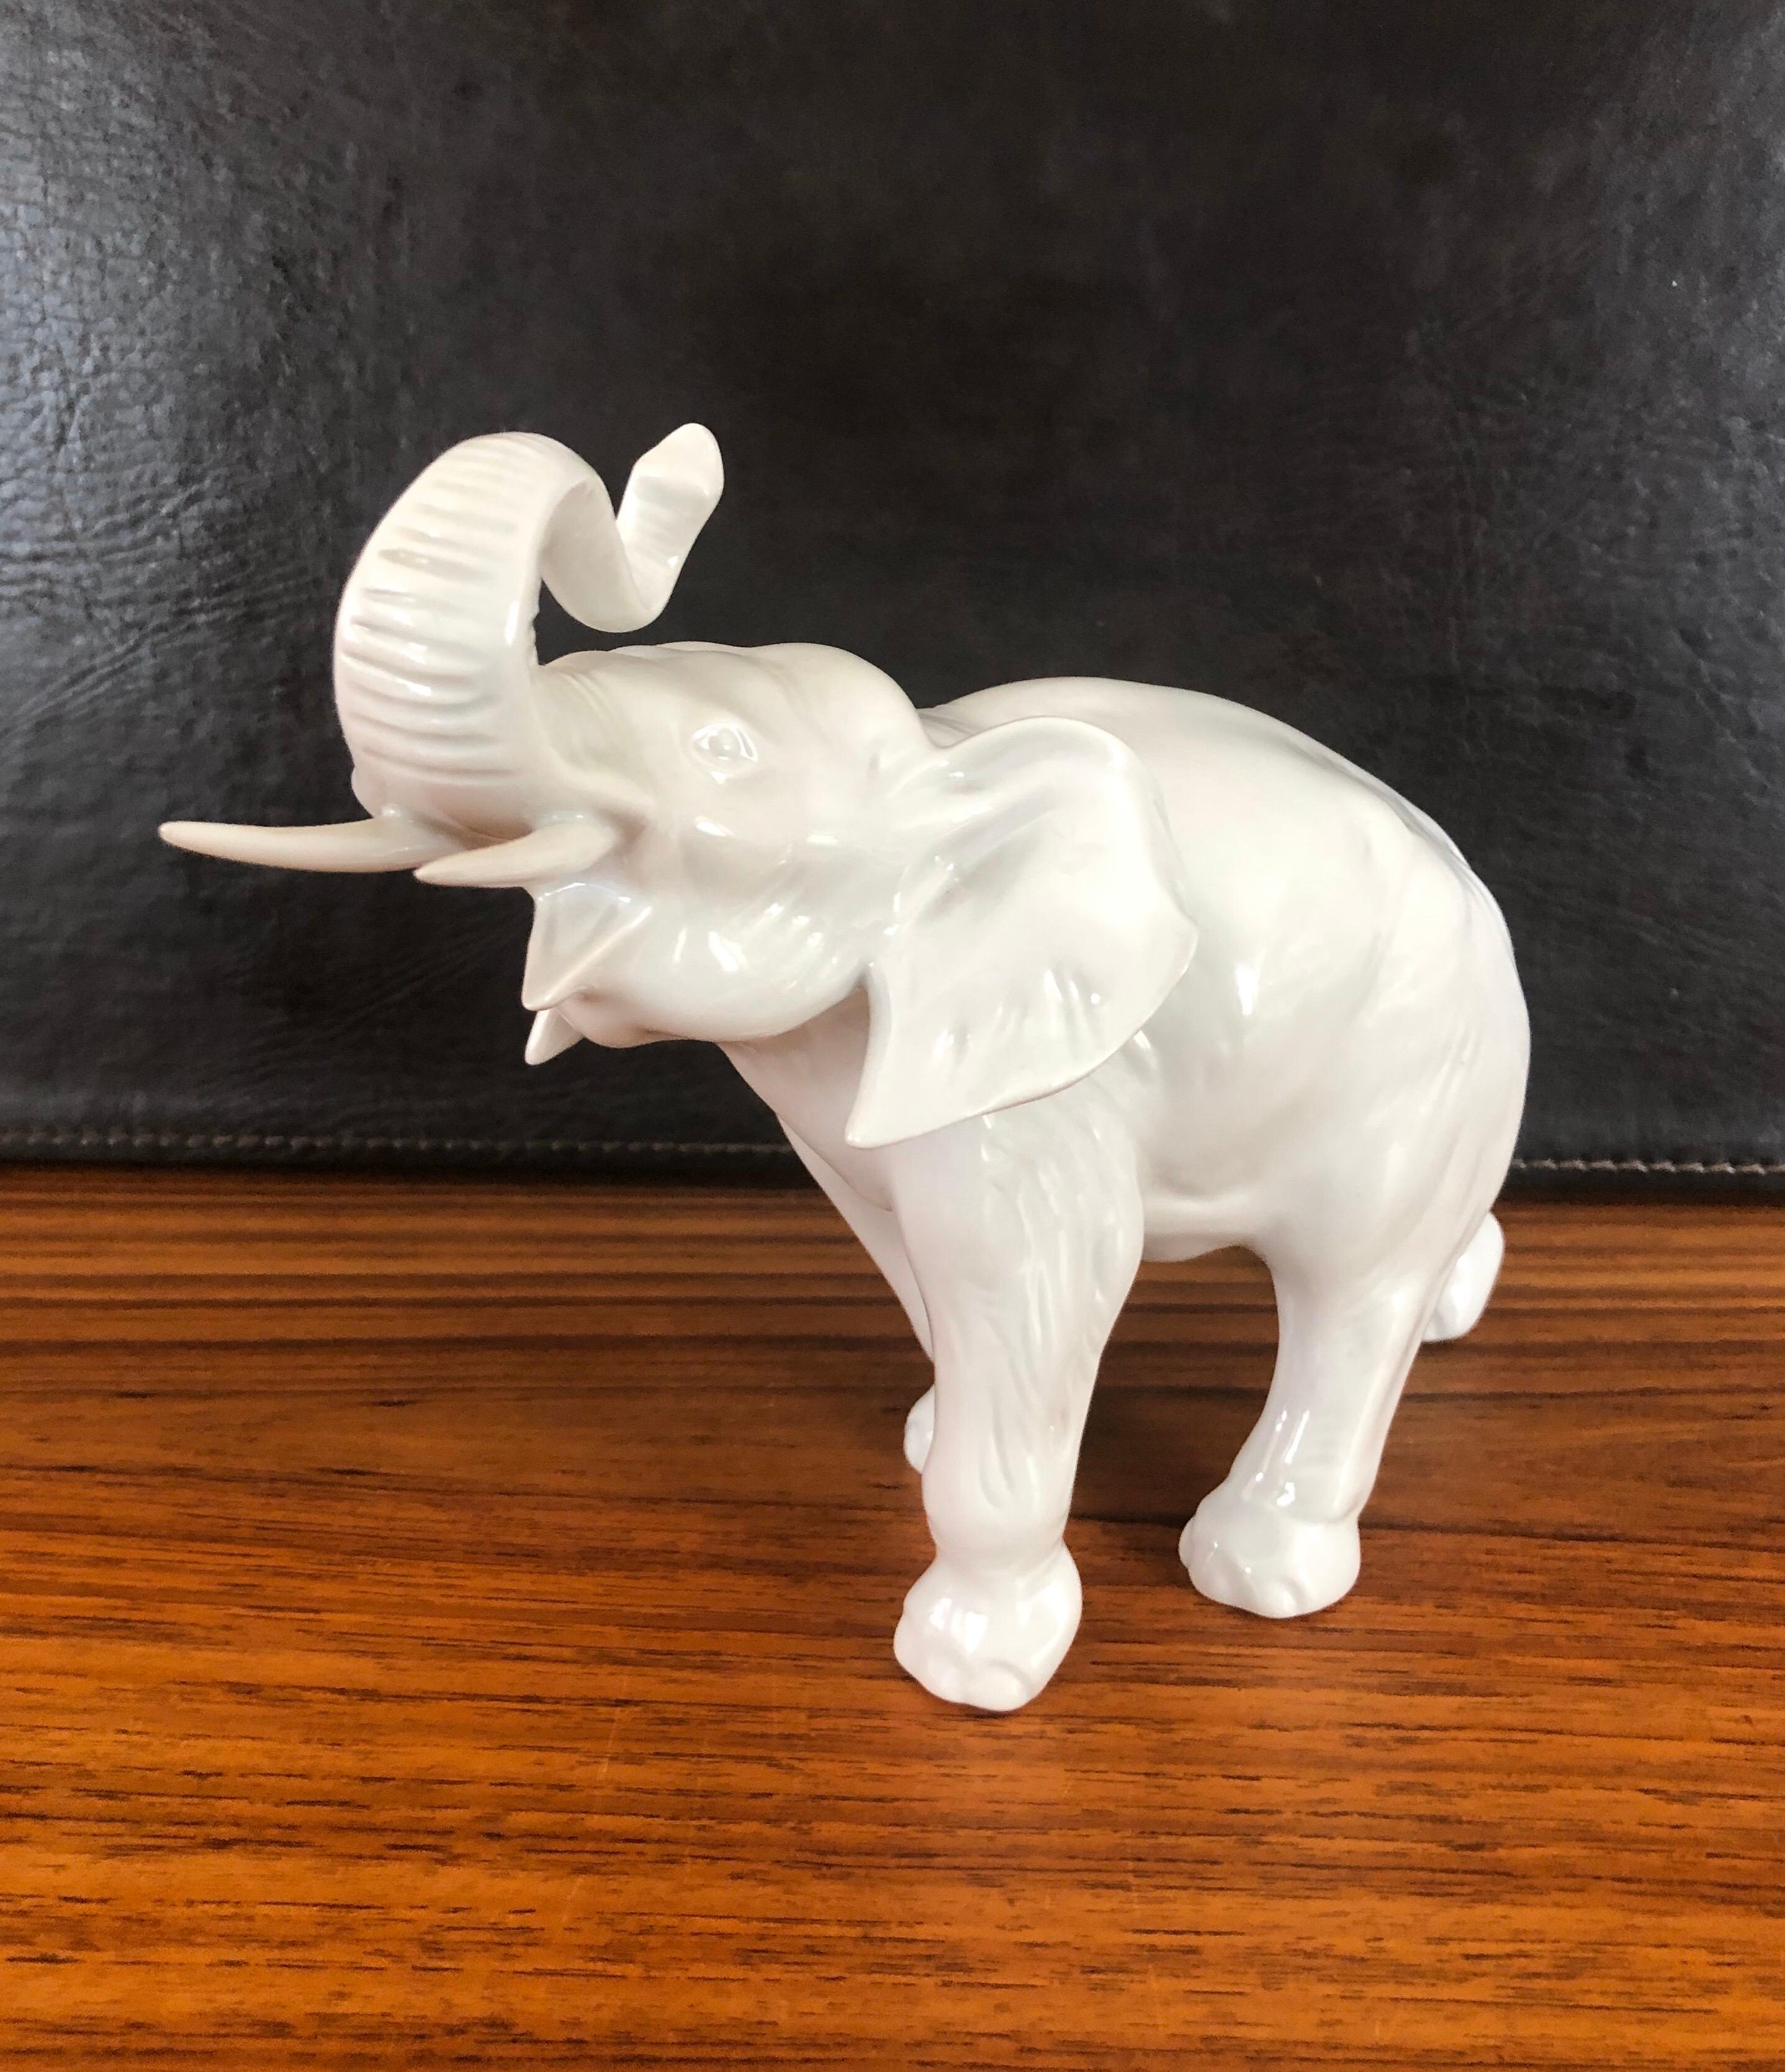 20th Century Pair of White Porcelain Elephant Sculptures by Royal Dux For Sale